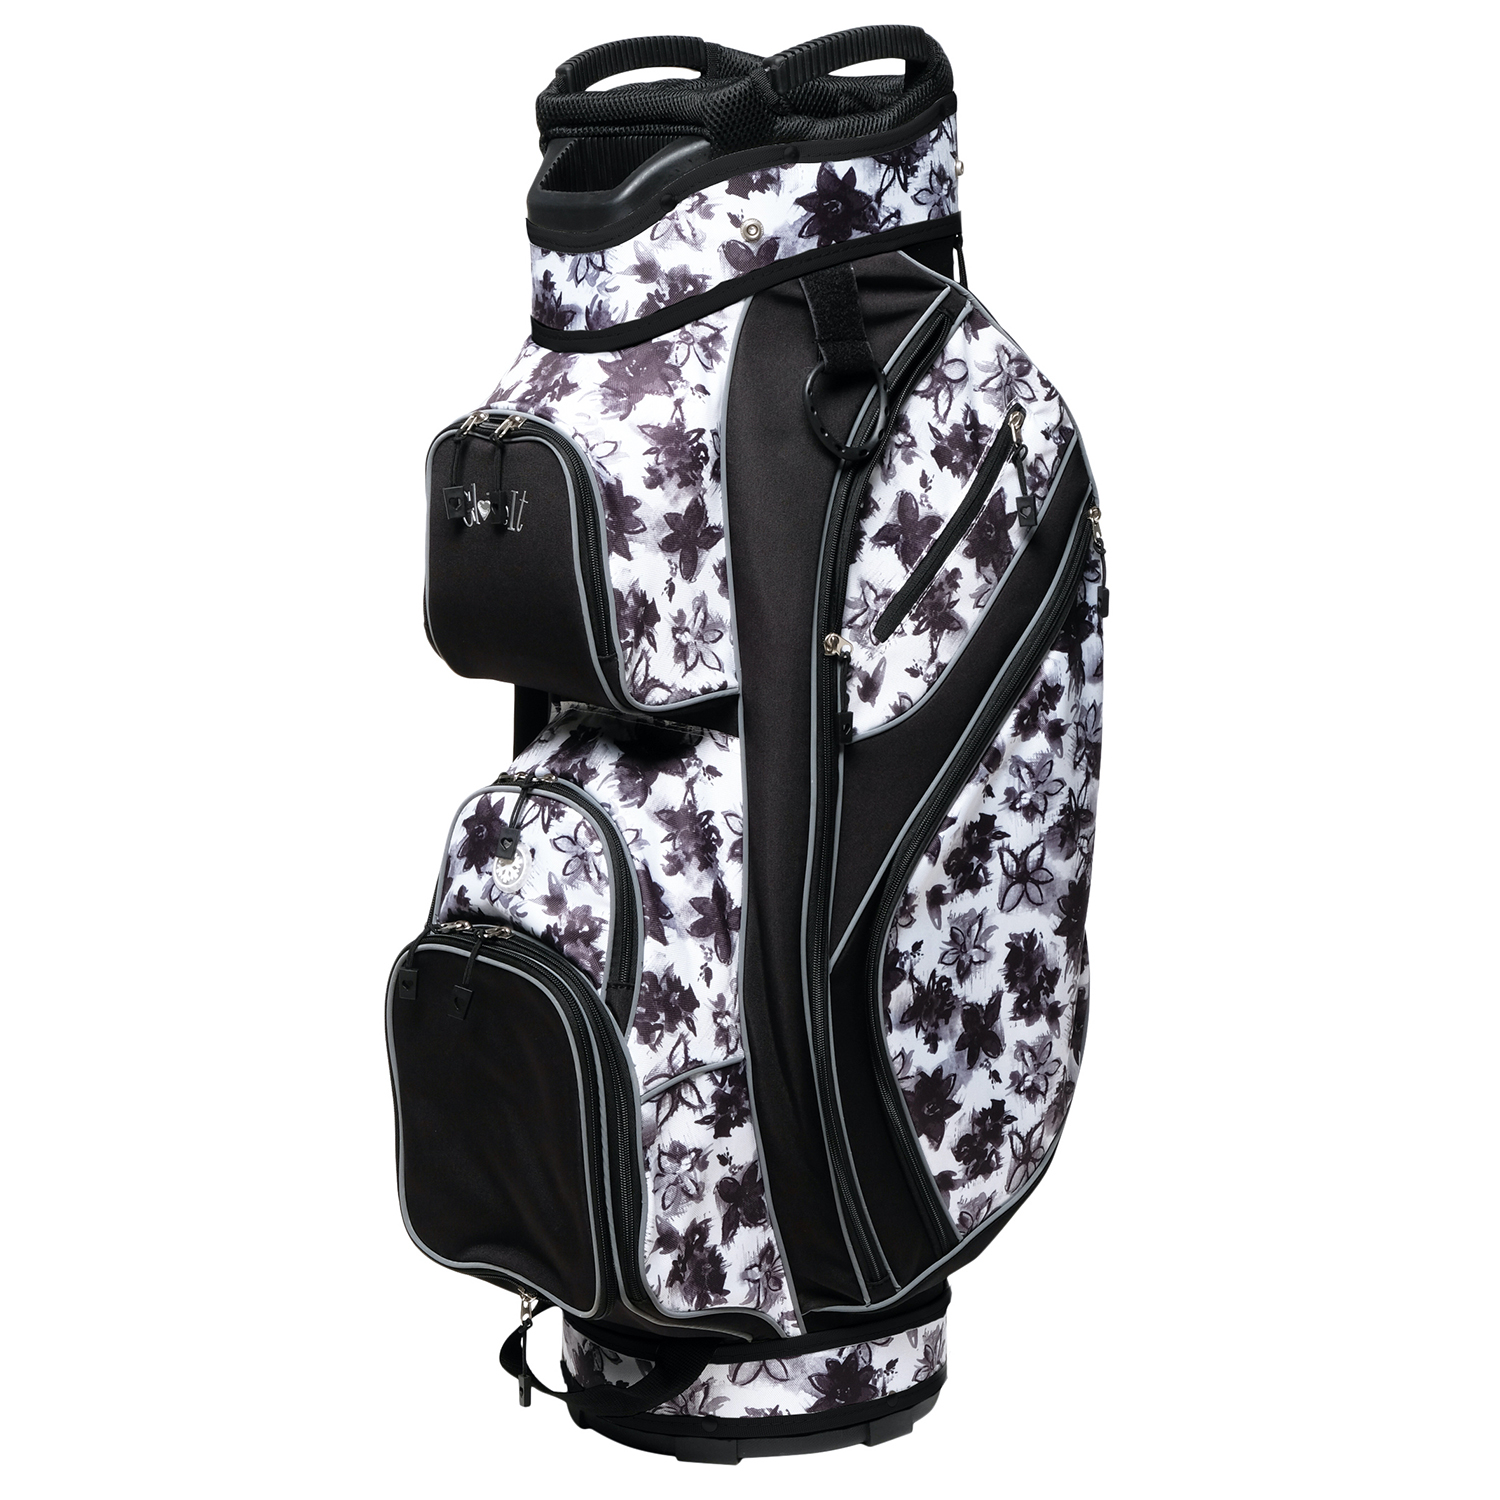 Taboo Fashions Monaco Premium Lightweight Designer Golf Cart Bag for Women